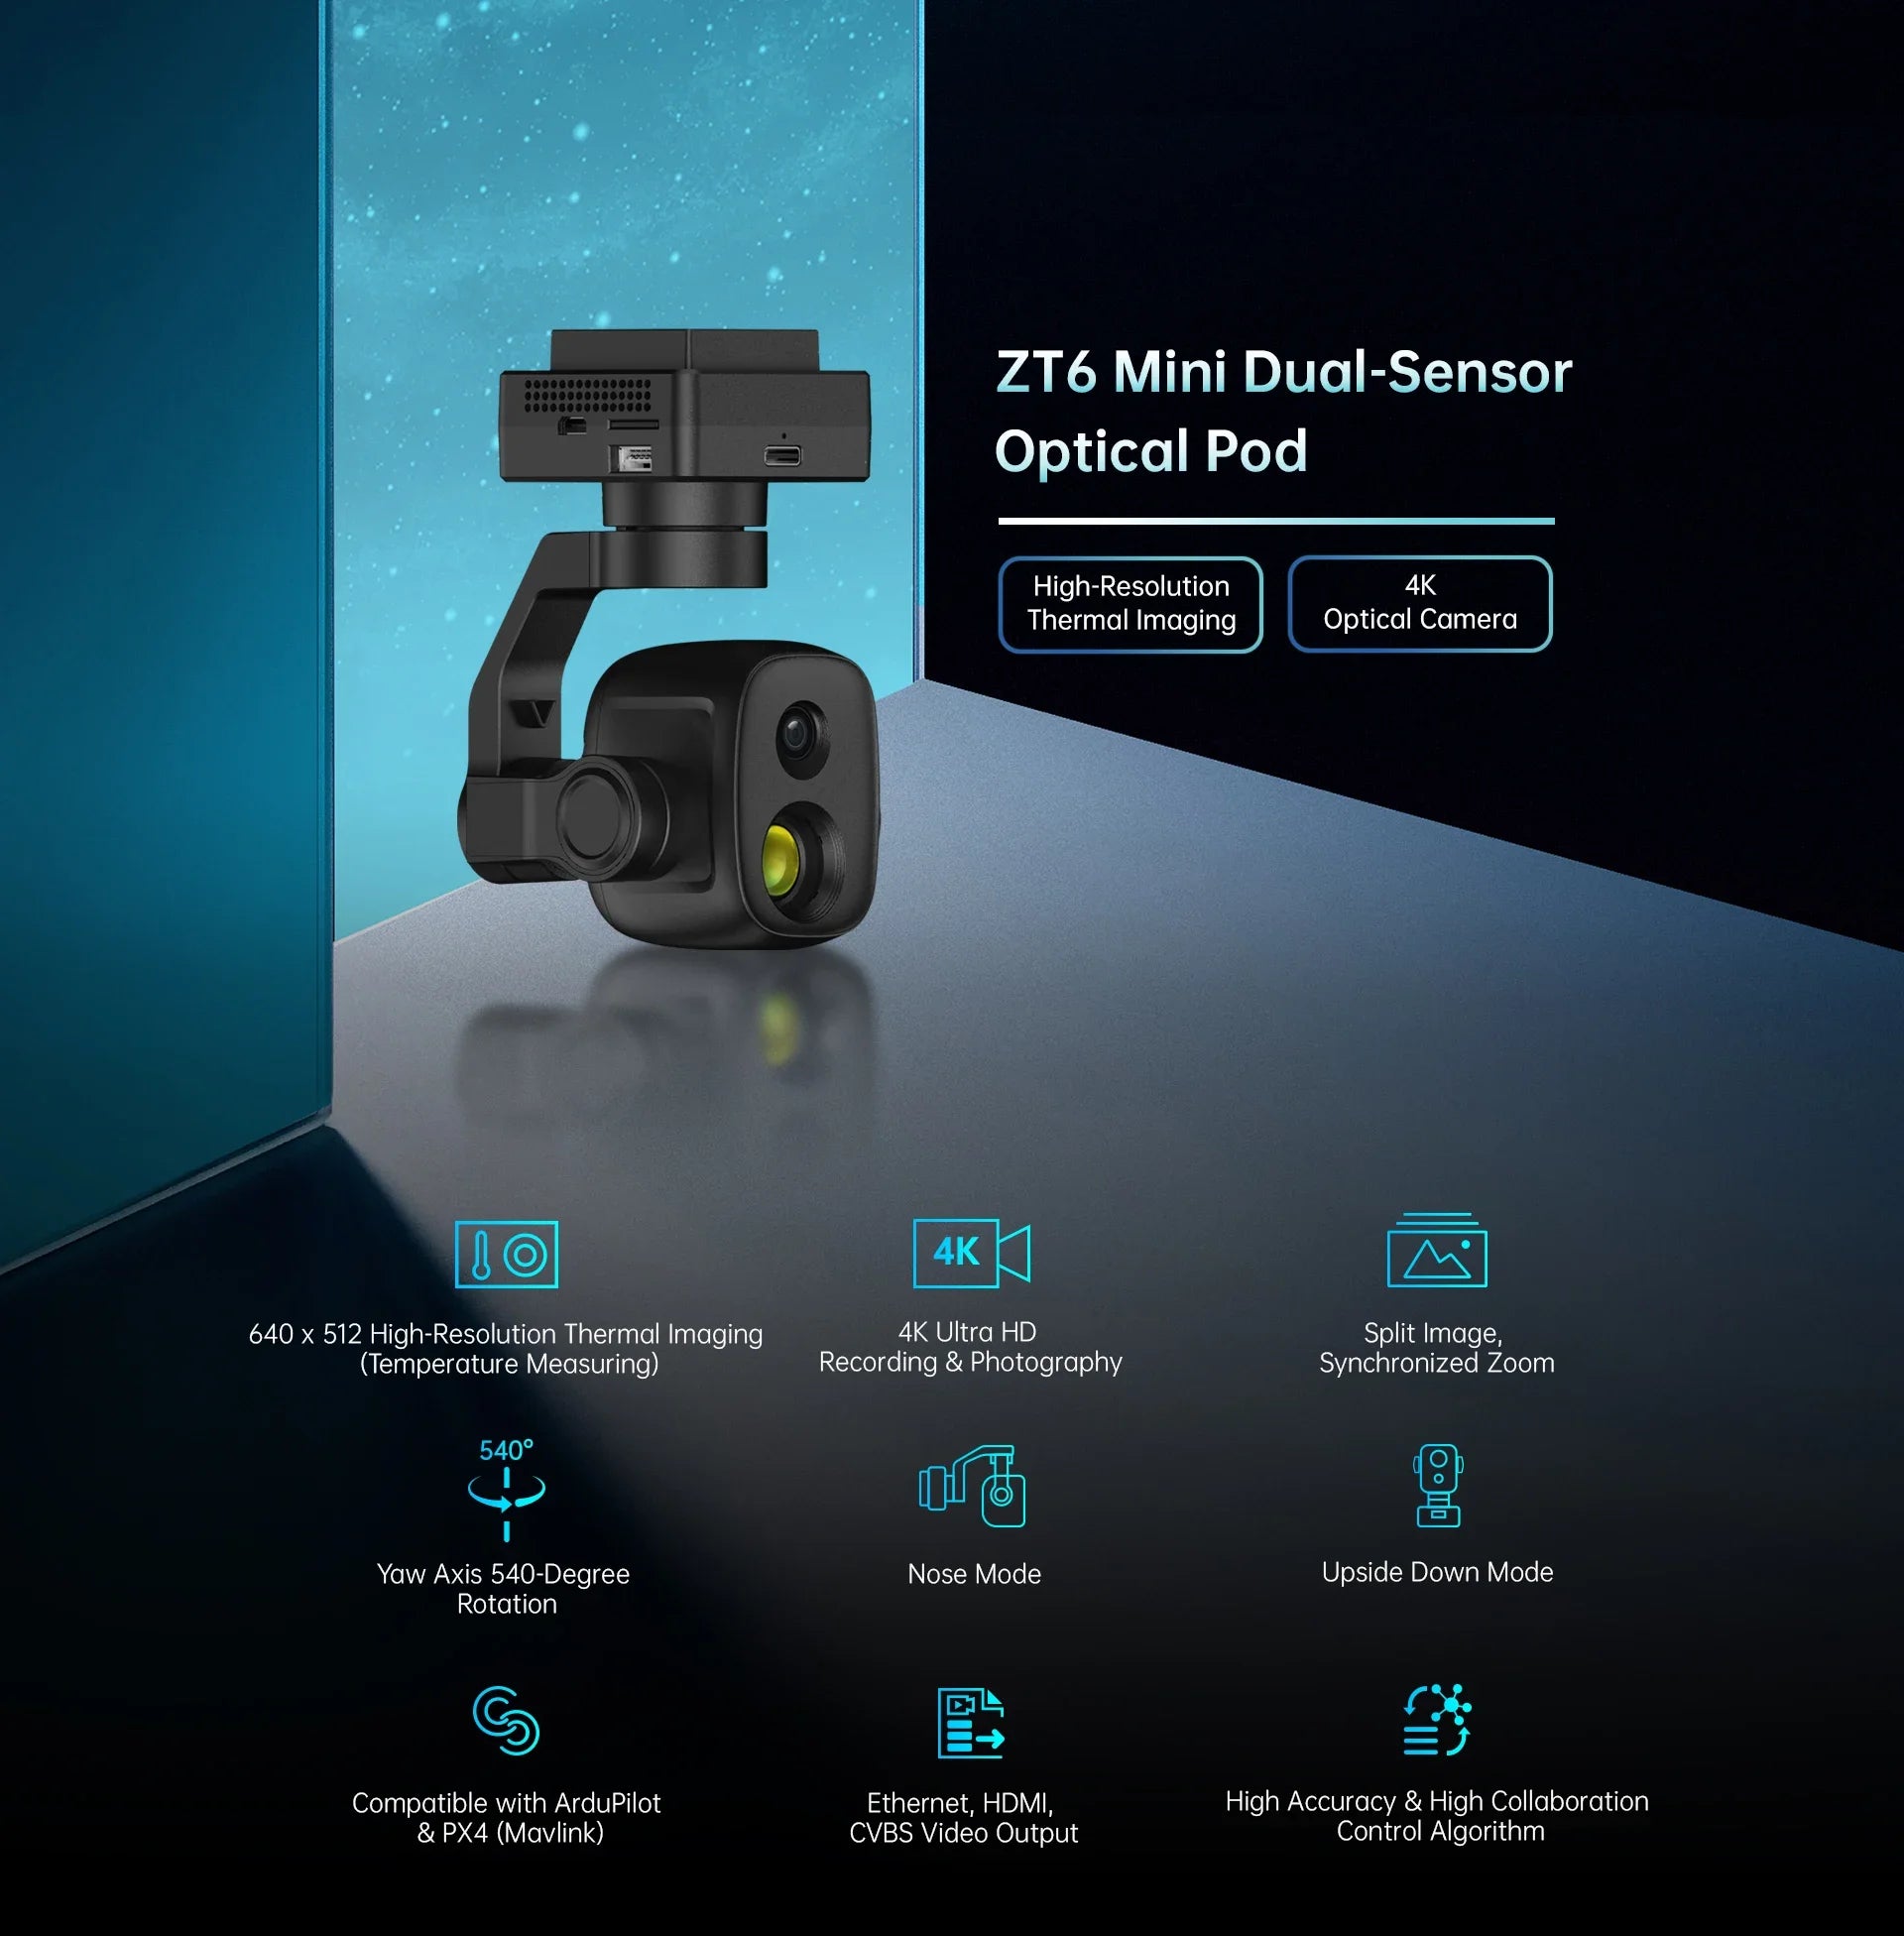 SIYI ZT6 Mini Dual Sensor Optical Pod, High-resolution camera and thermal imaging pod for capturing dual-sensor images with temperature measurement.